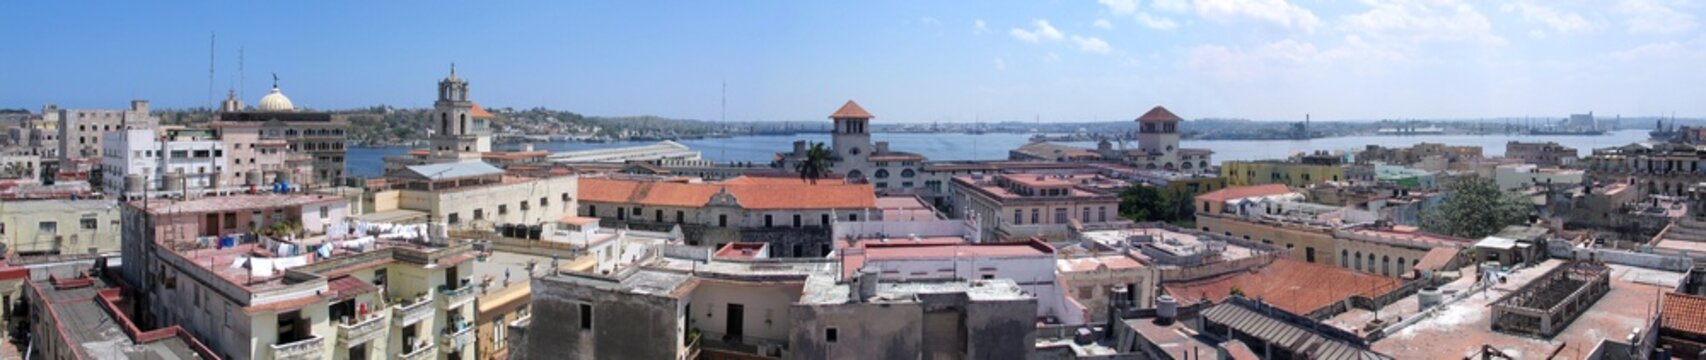 Panoramic view of old Havana buildings